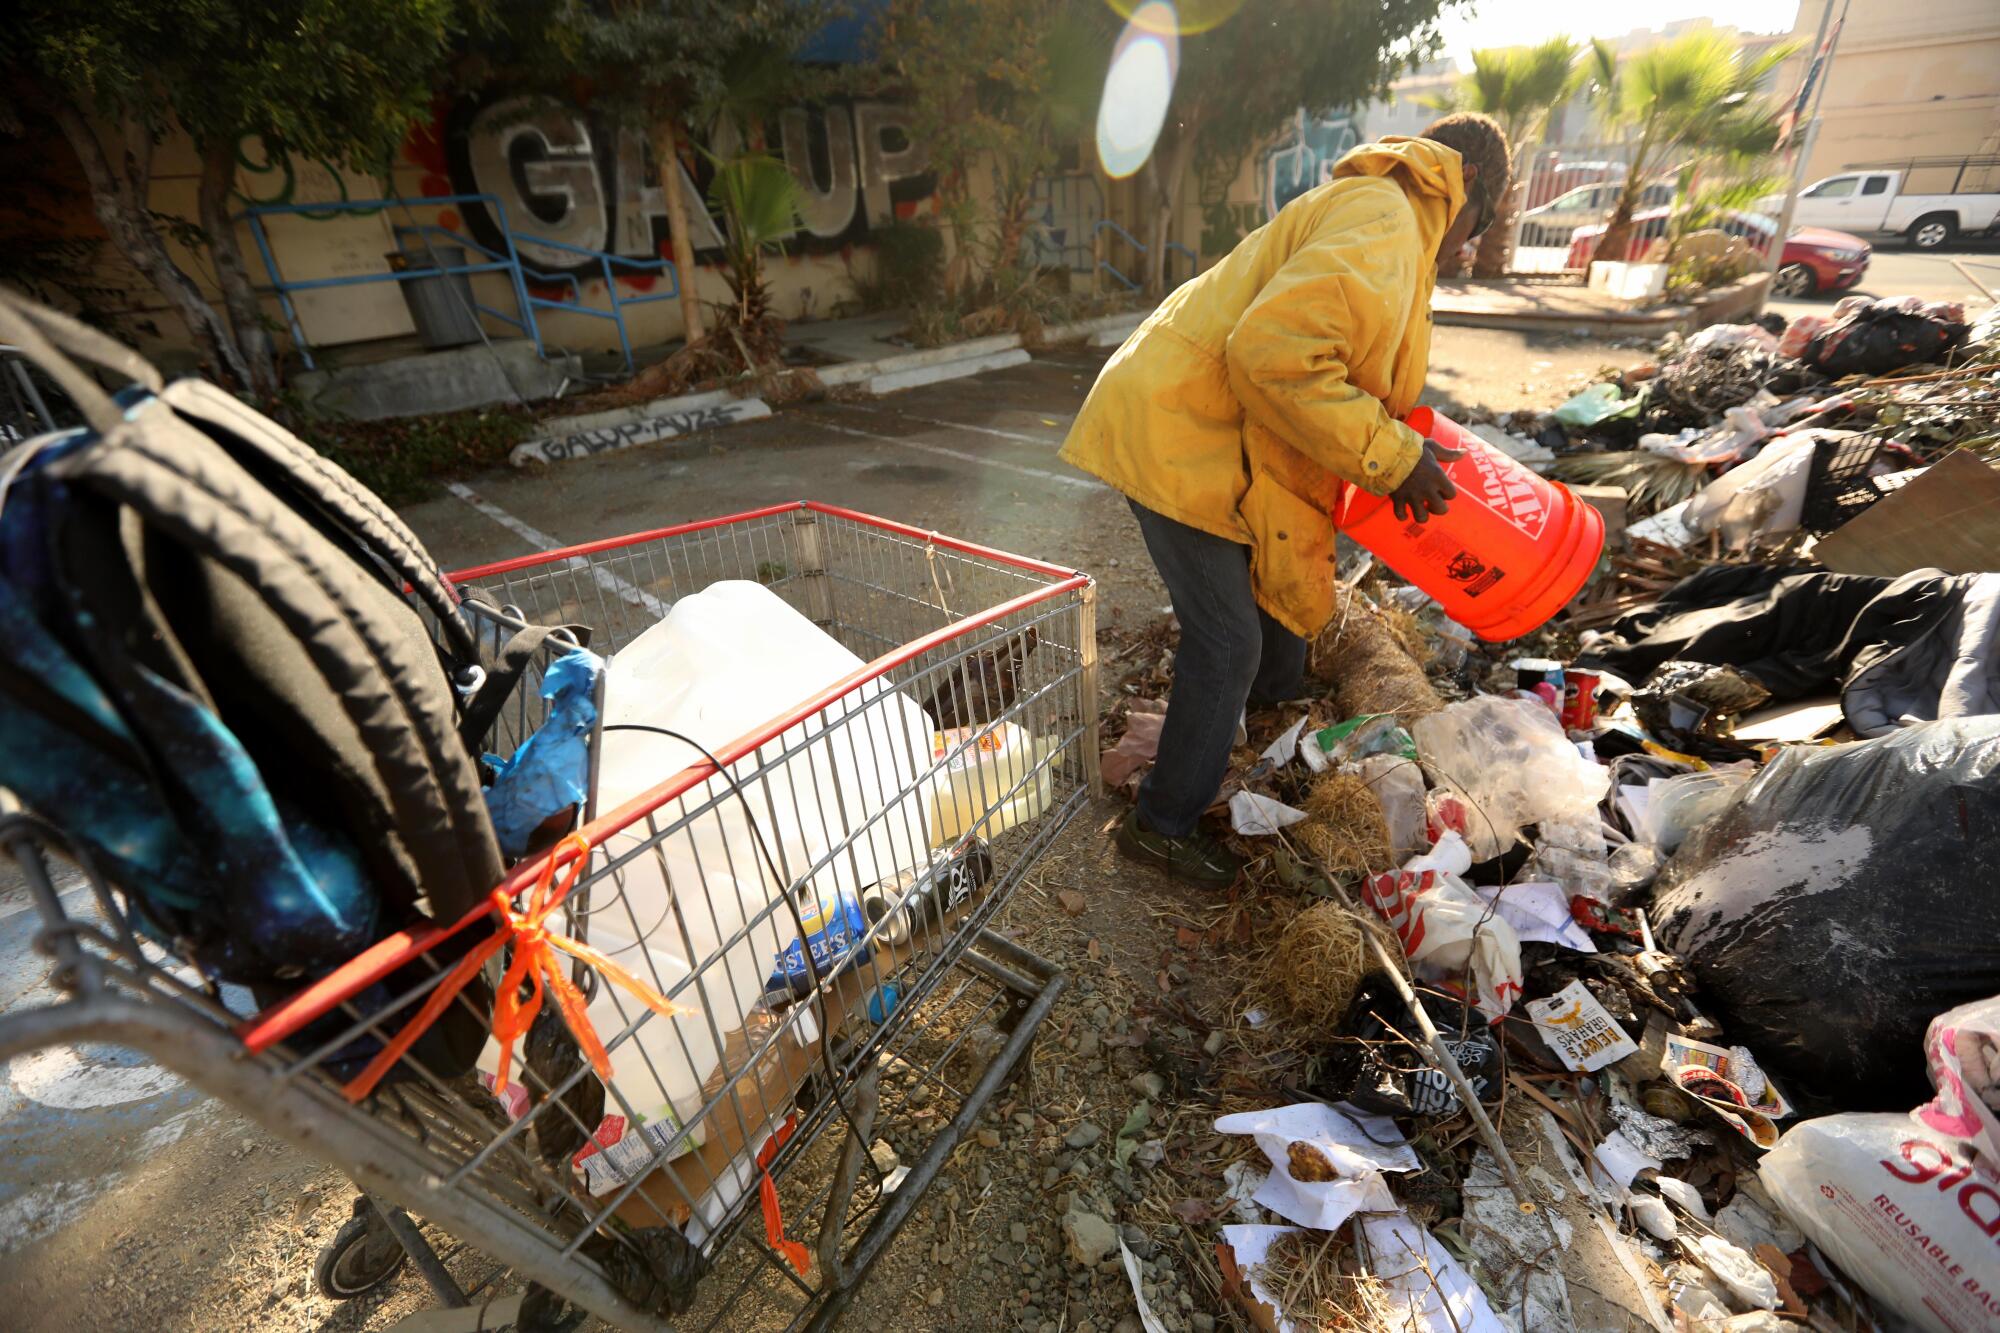 A man dumps an orange bucket of items onto a trash heap in a dirt lot